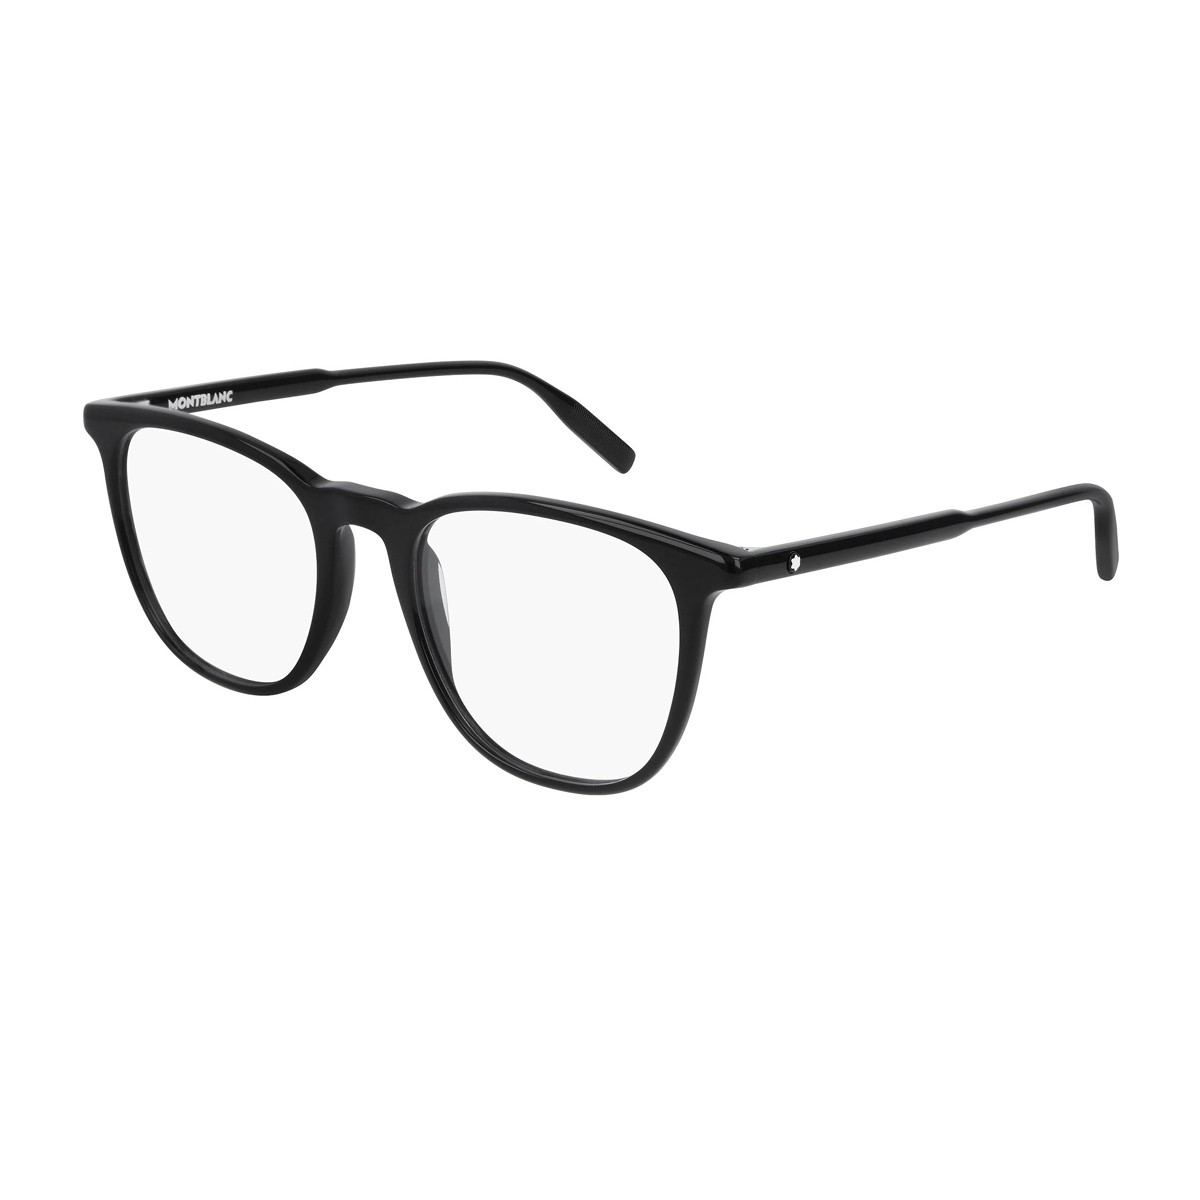 11BC4B20A - - Montblanc | Men's eyeglasses